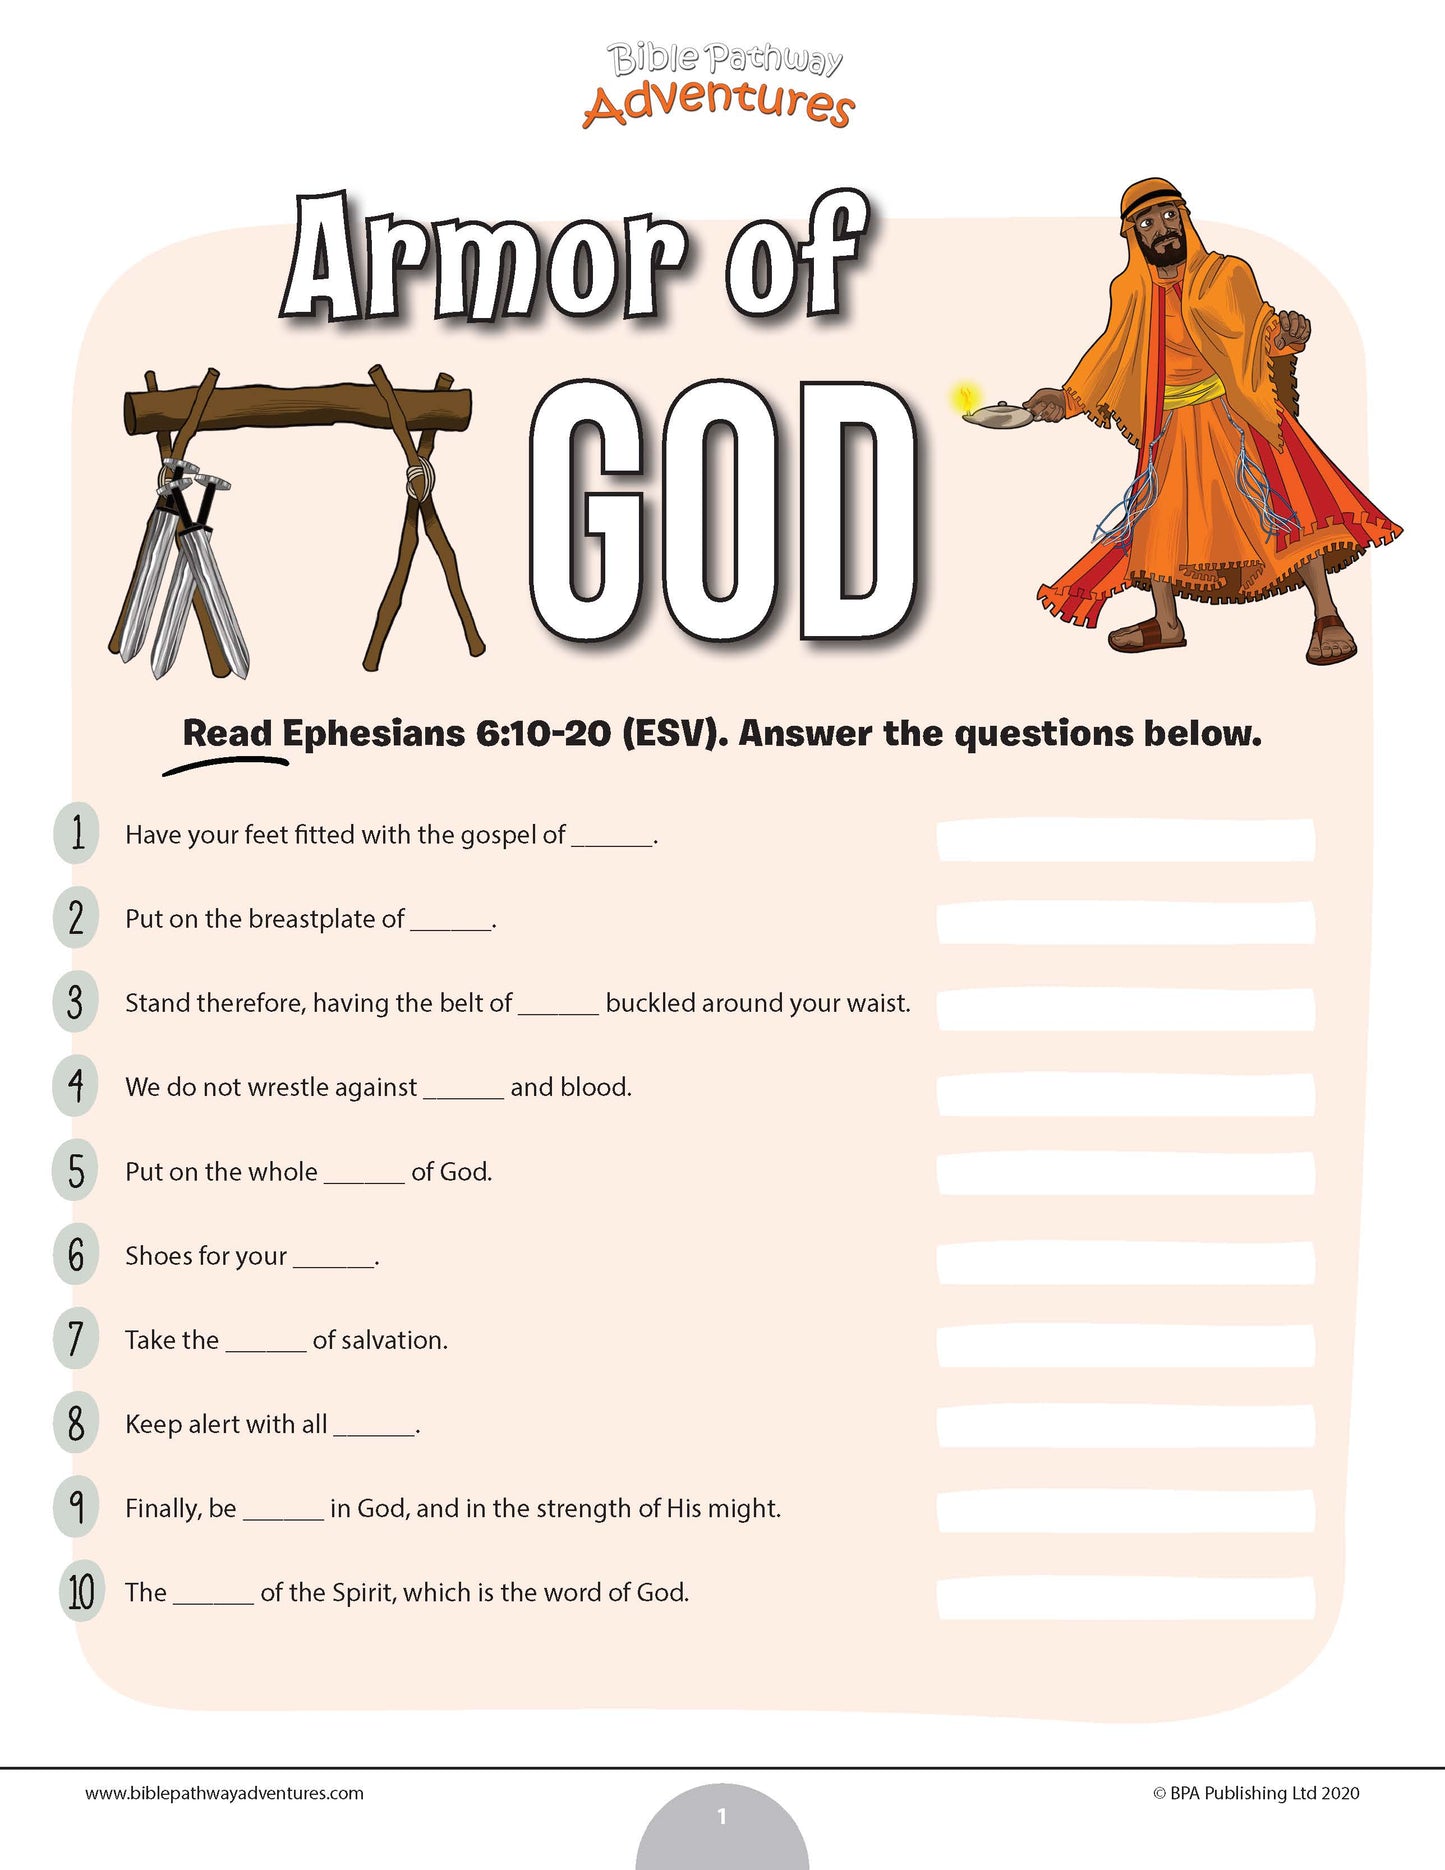 Armor of God quiz